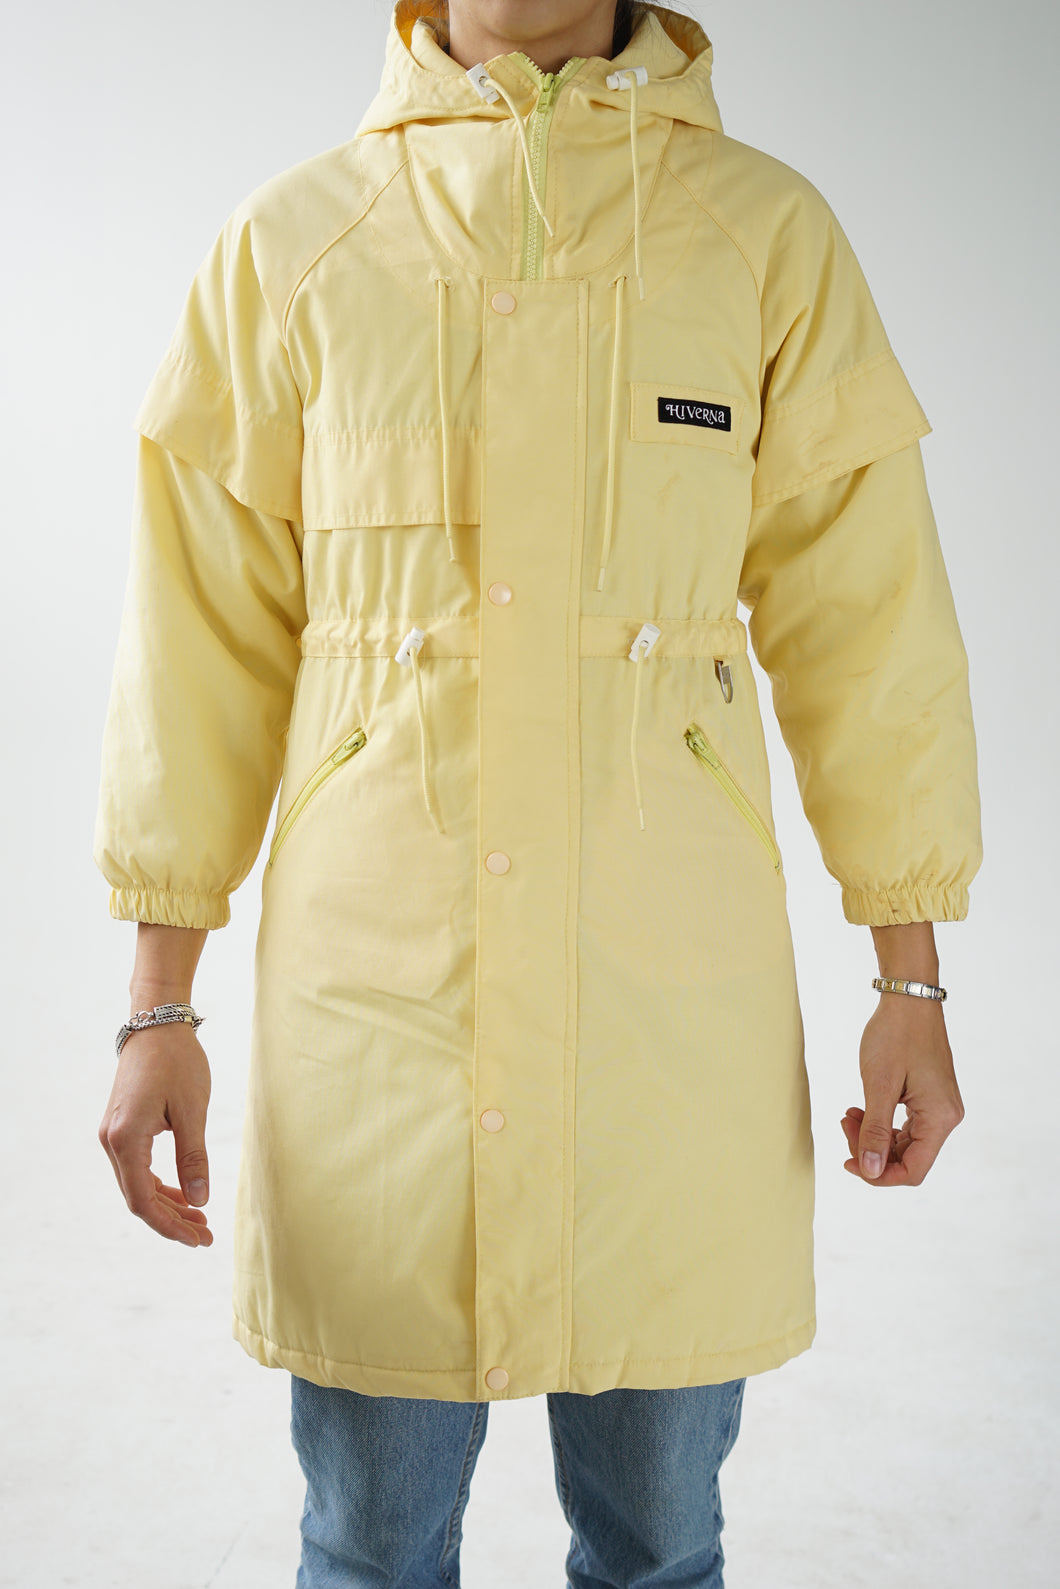 Vintage yellow light jacket | Manteau léger vintage jaune canari